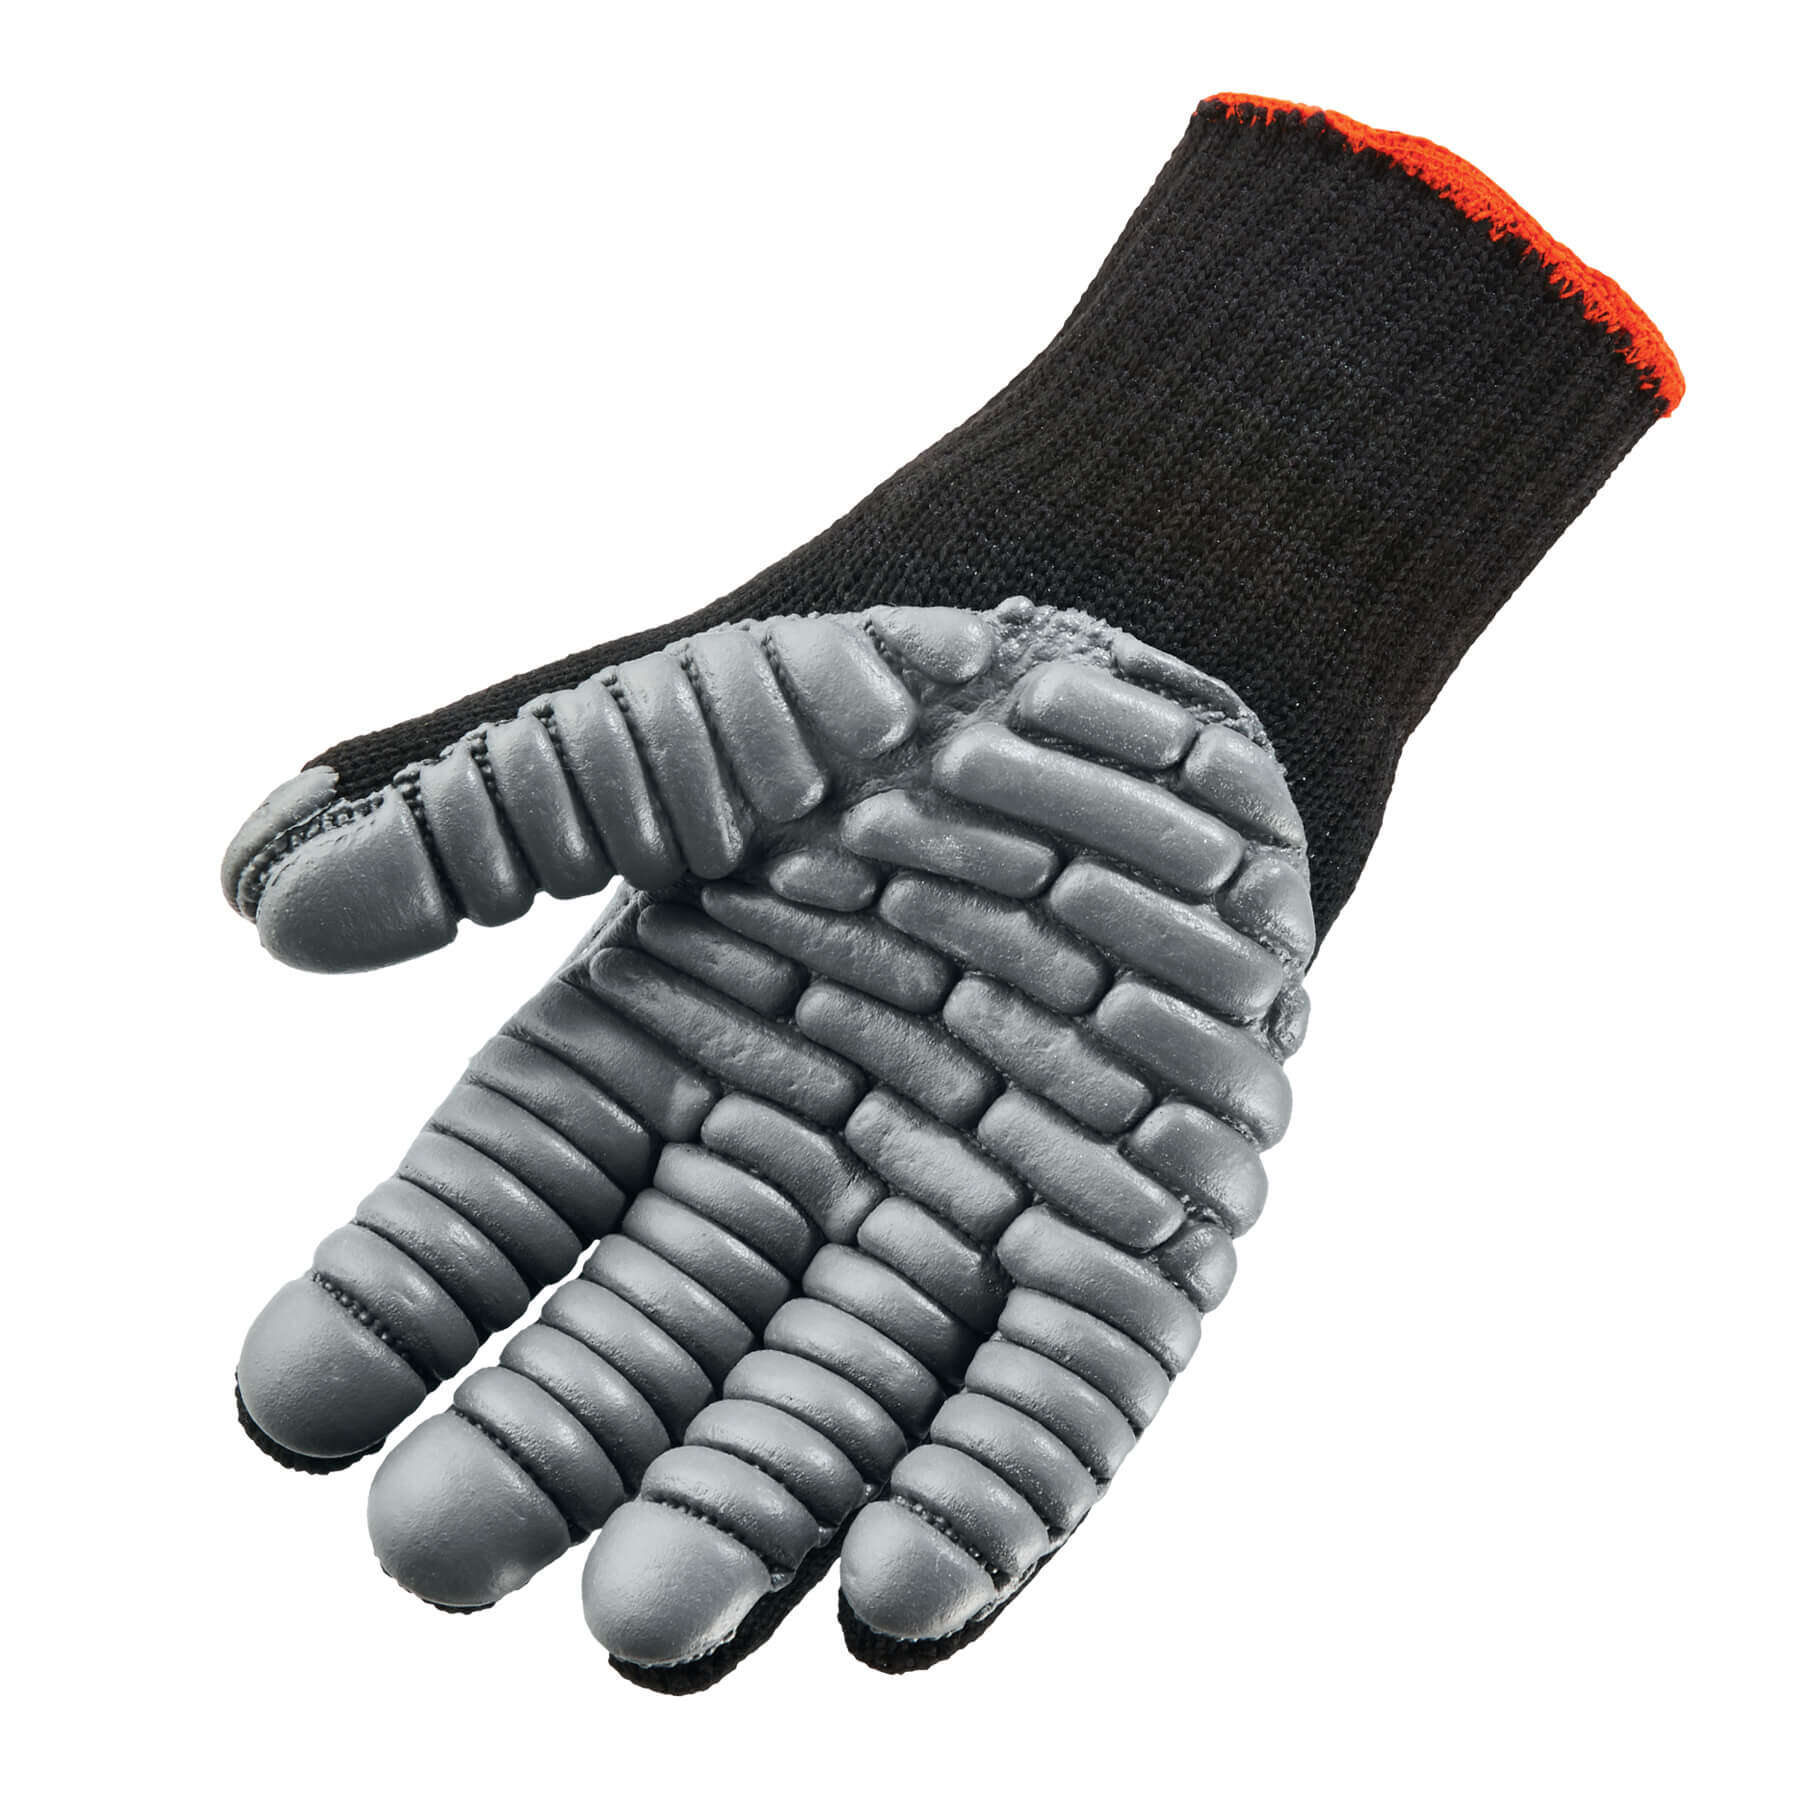 https://www.ergodyne.com/sites/default/files/product-images/16453-9000-lightweight-anti-vibration-gloves-palm.jpg